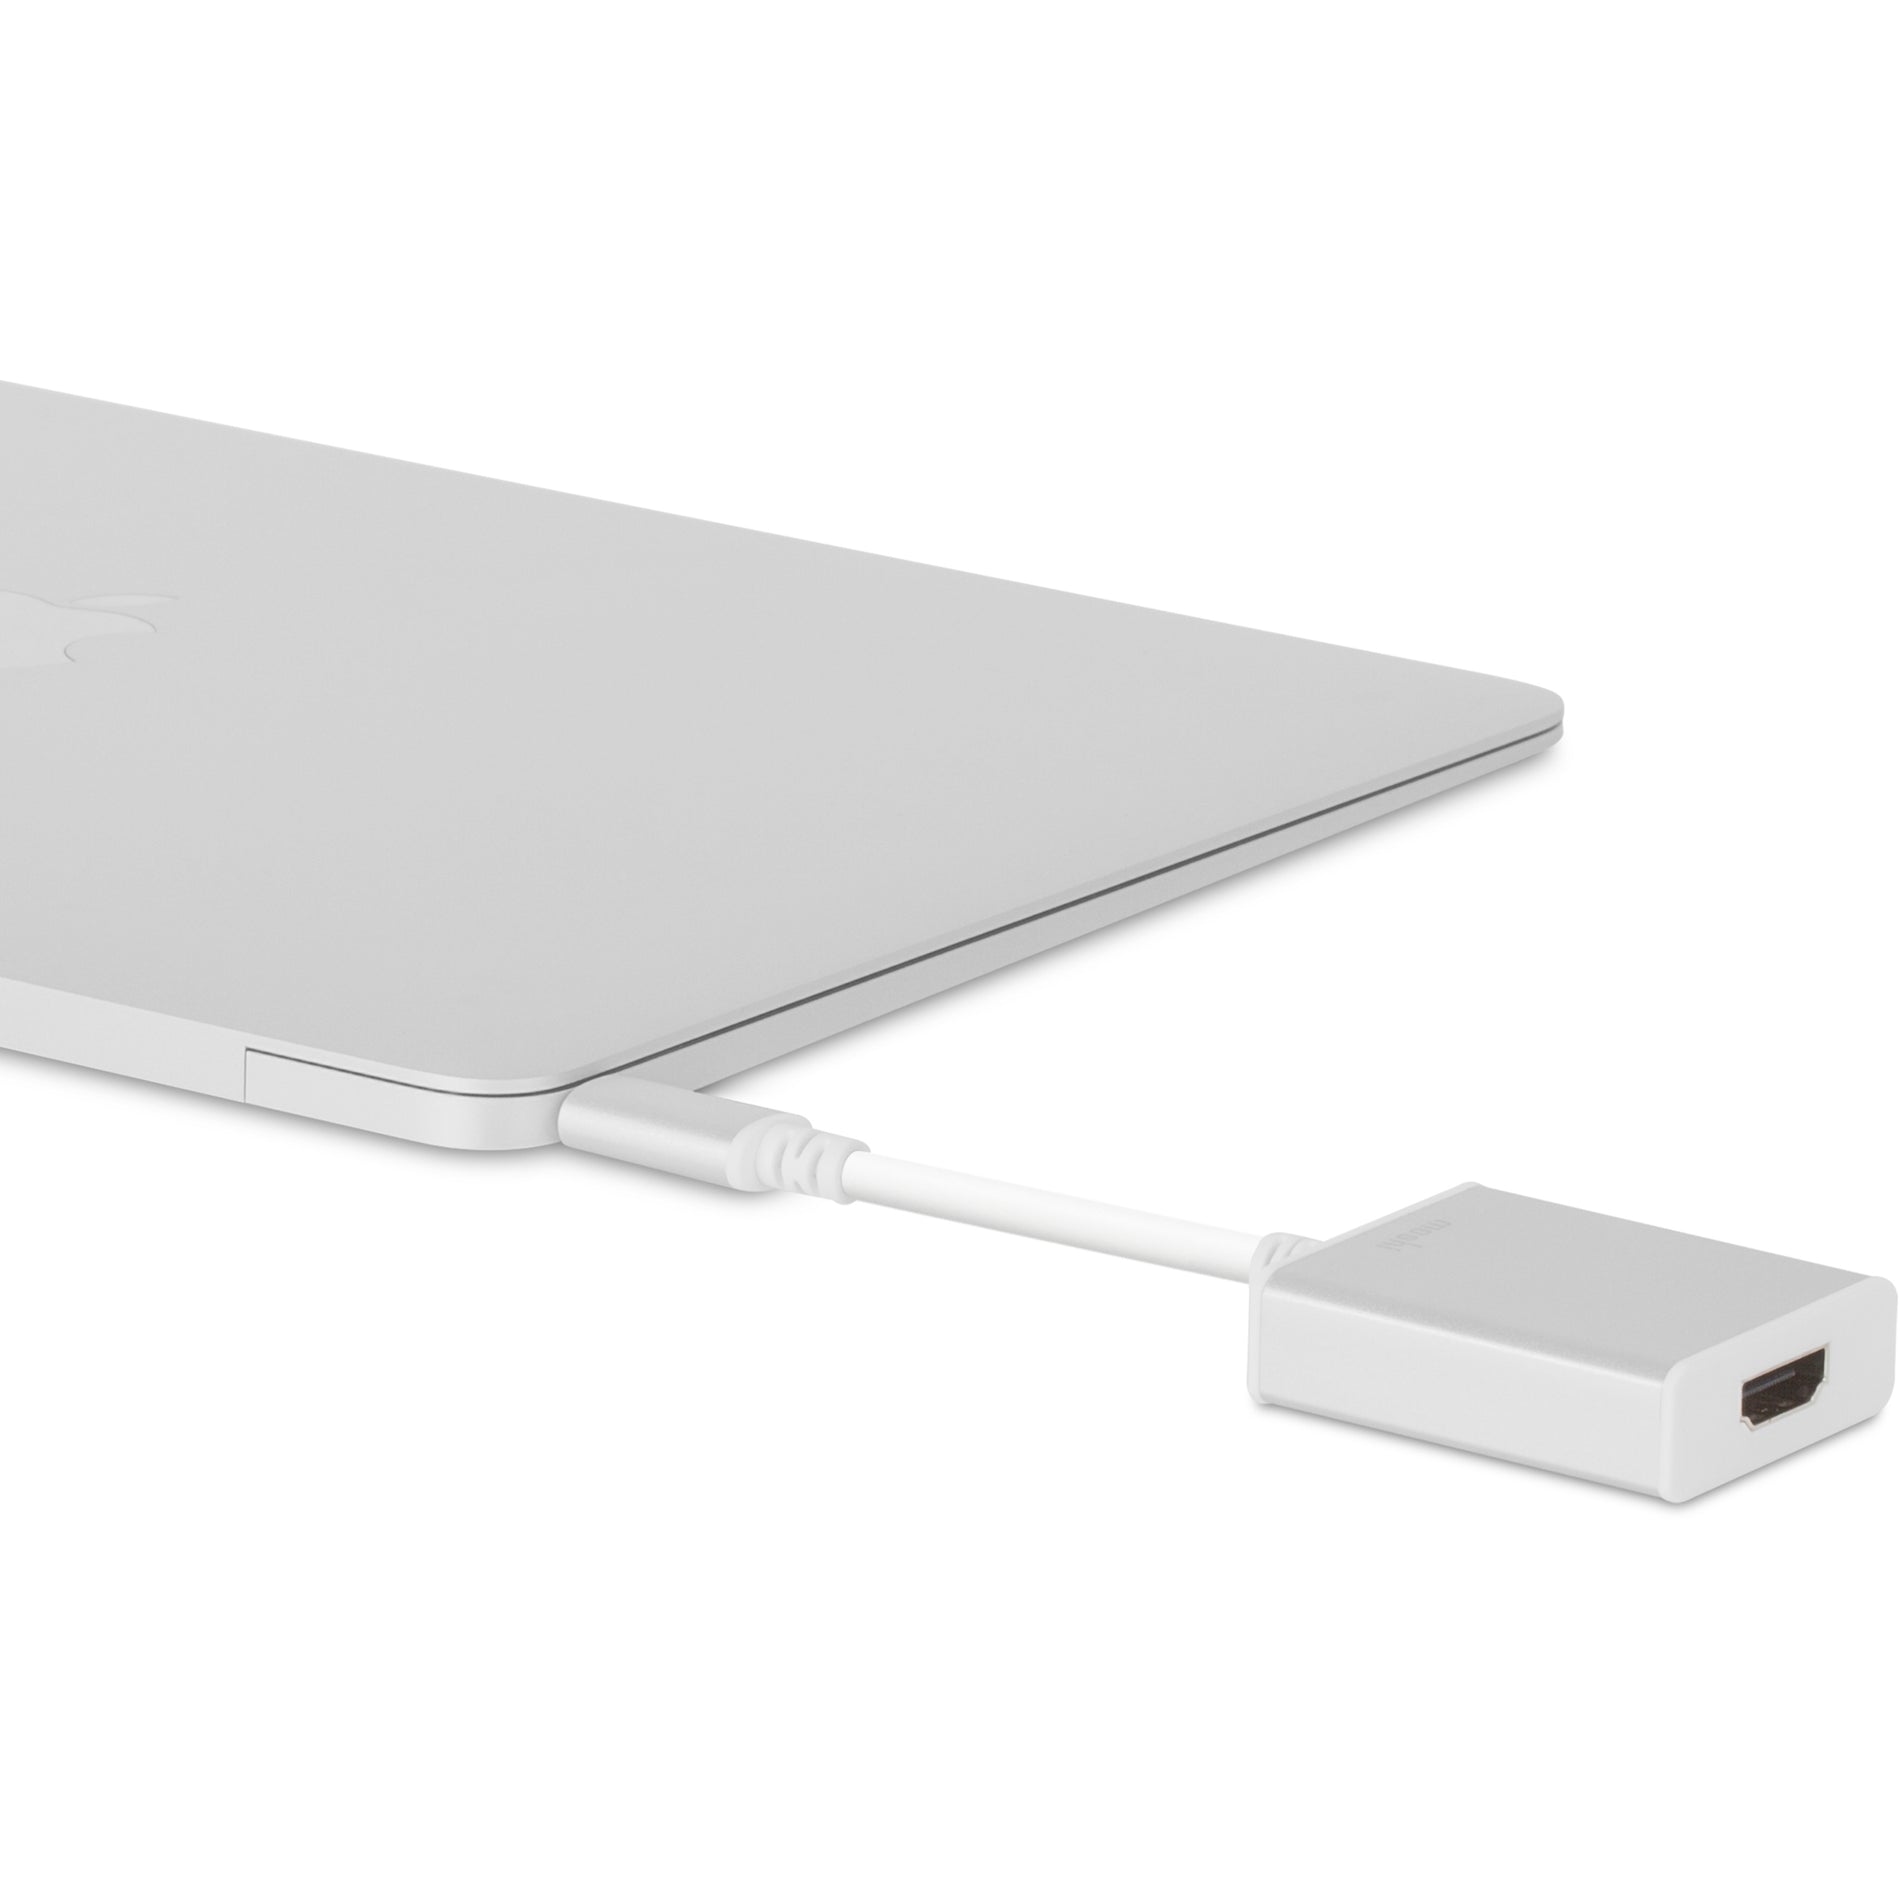 Moshi 99MO084202 USB-C to HDMI Adapter, Mac Compatible, 10 Year Warranty